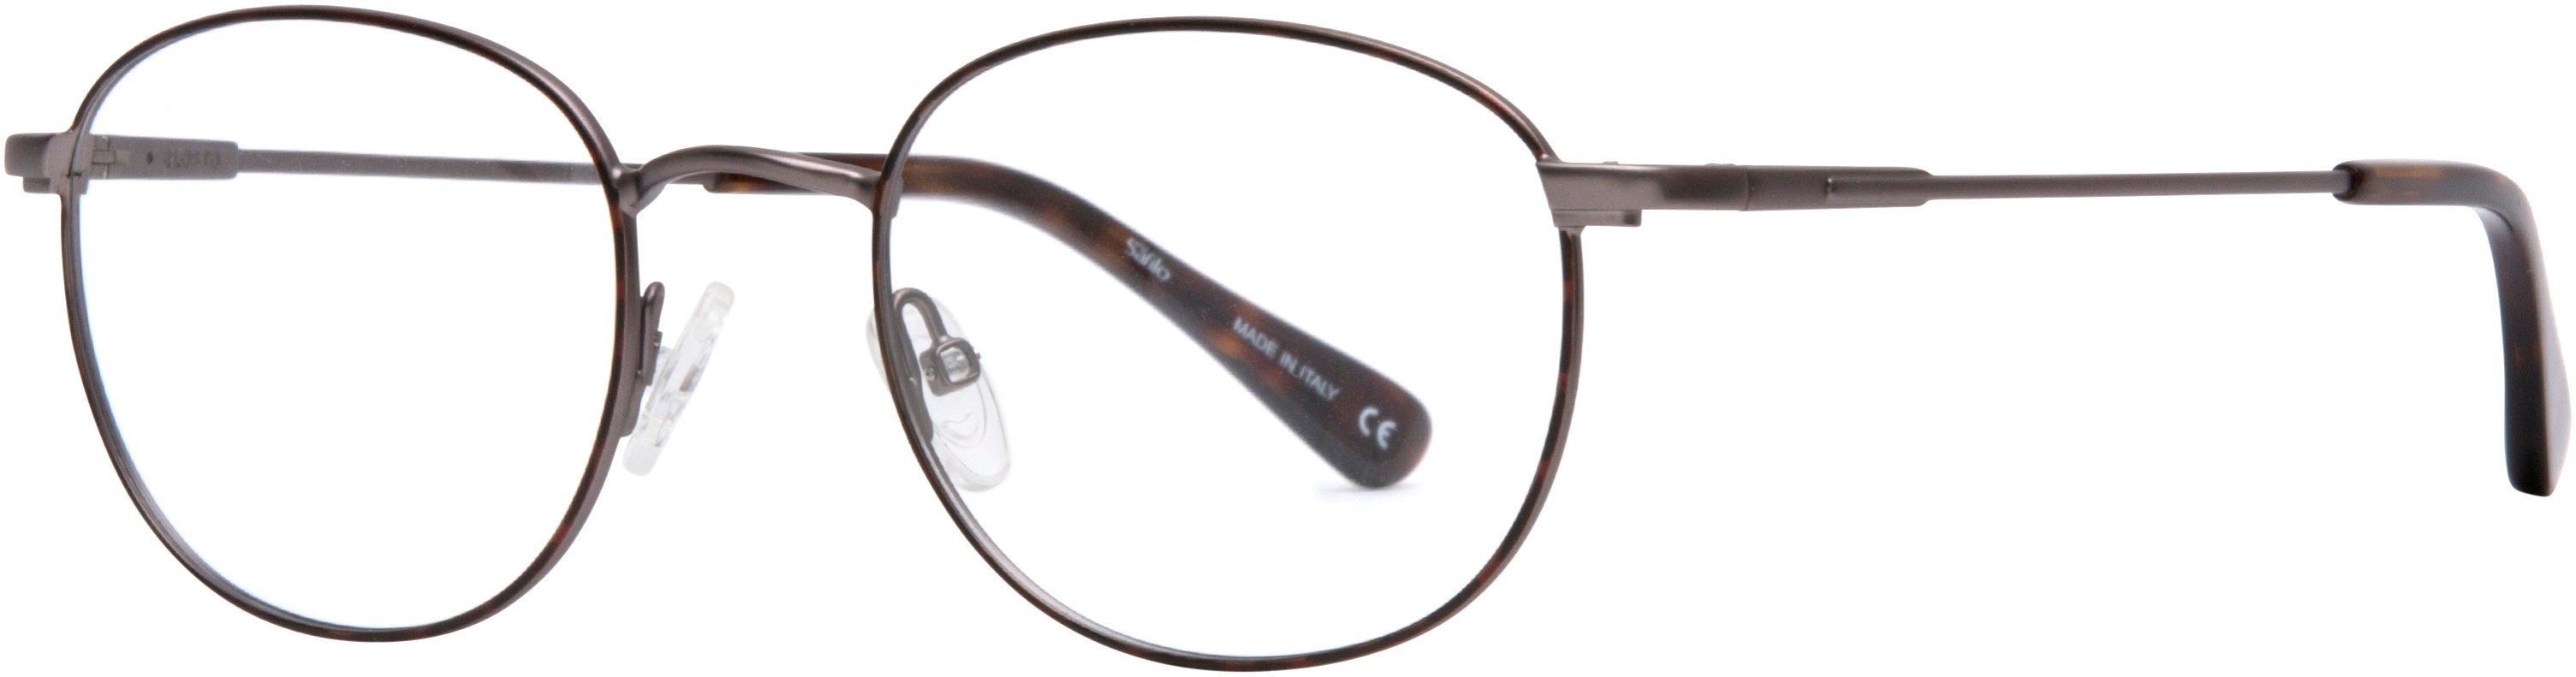  Elasta 7226 Tea Cup Eyeglasses 0AB8-0AB8  Havana Gray (00 Demo Lens)